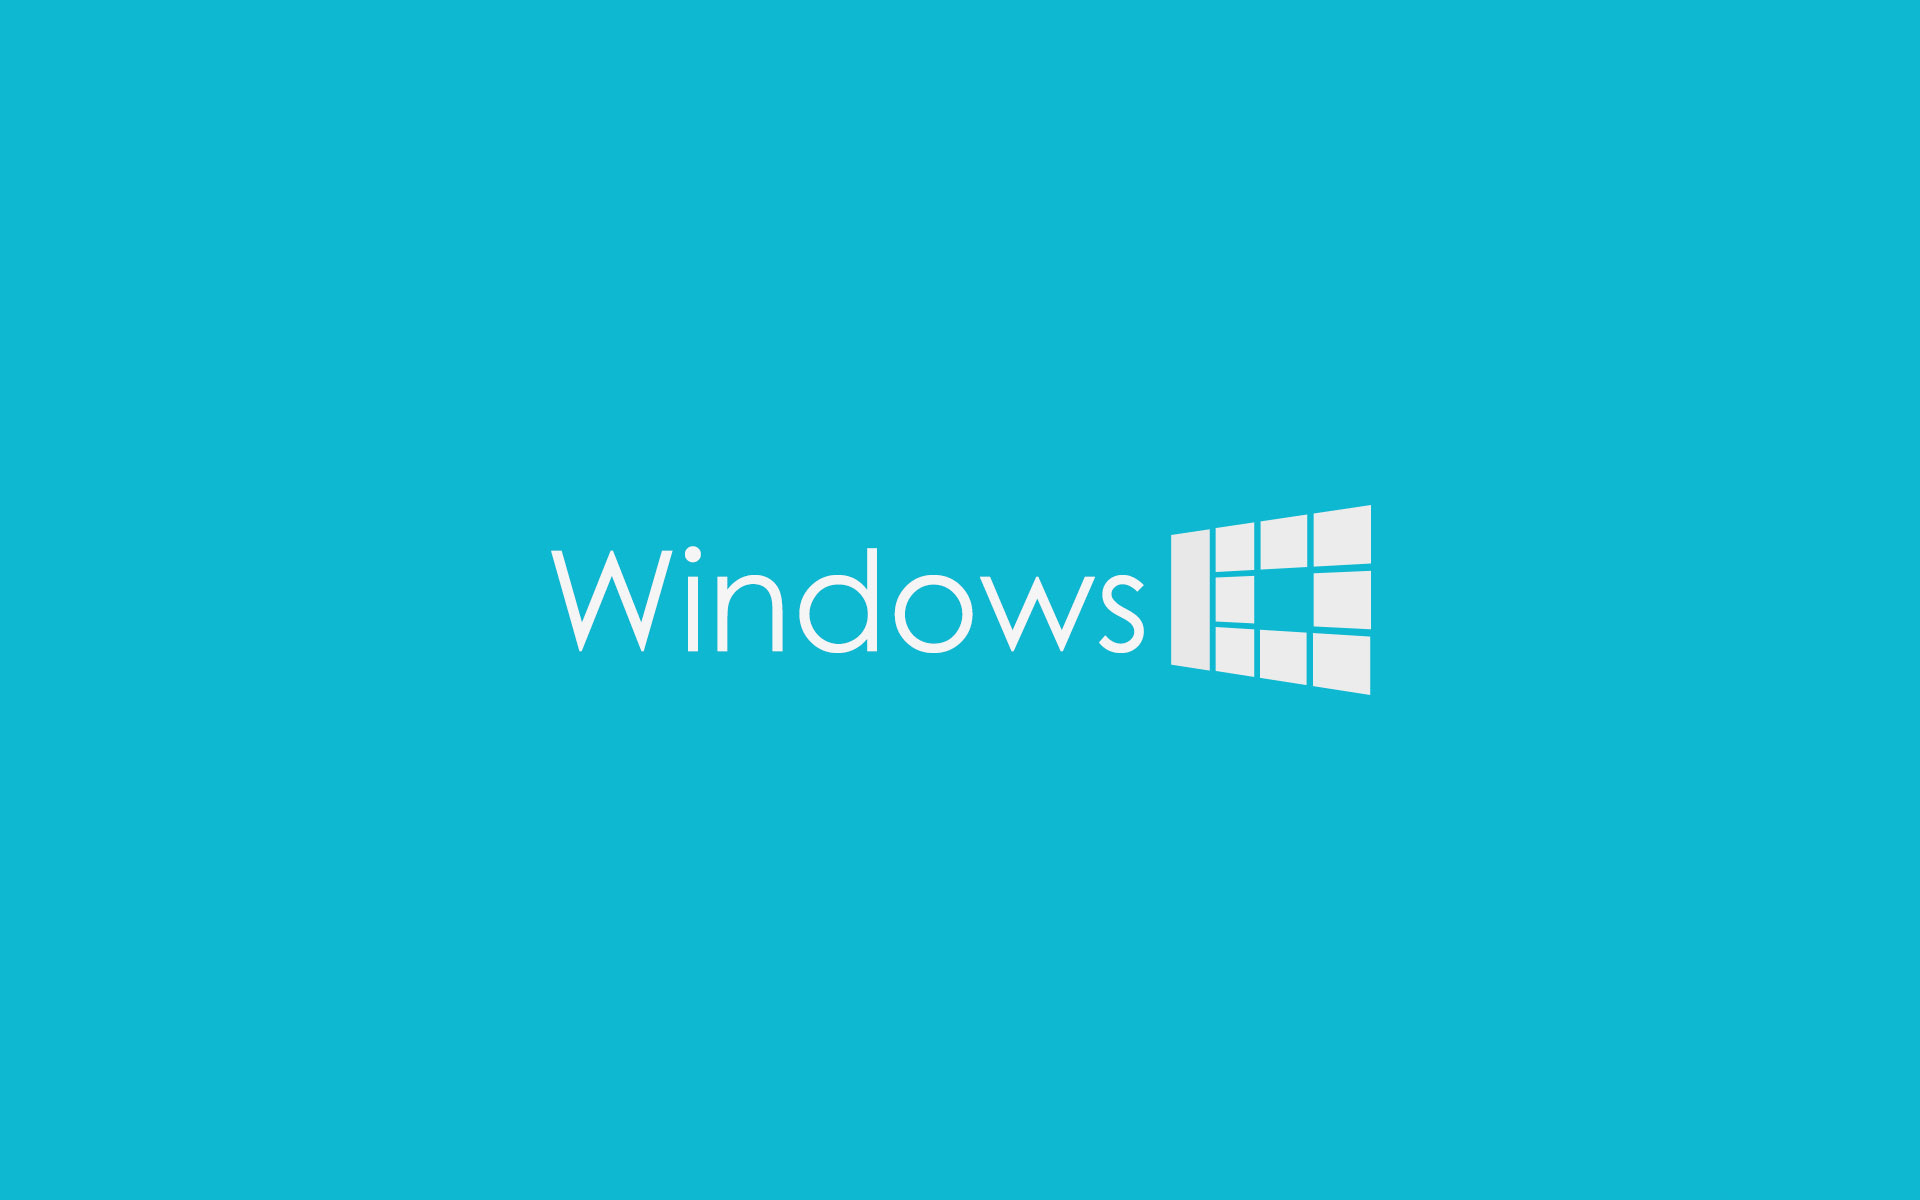 Windows Wallpaper Microsoft Apps